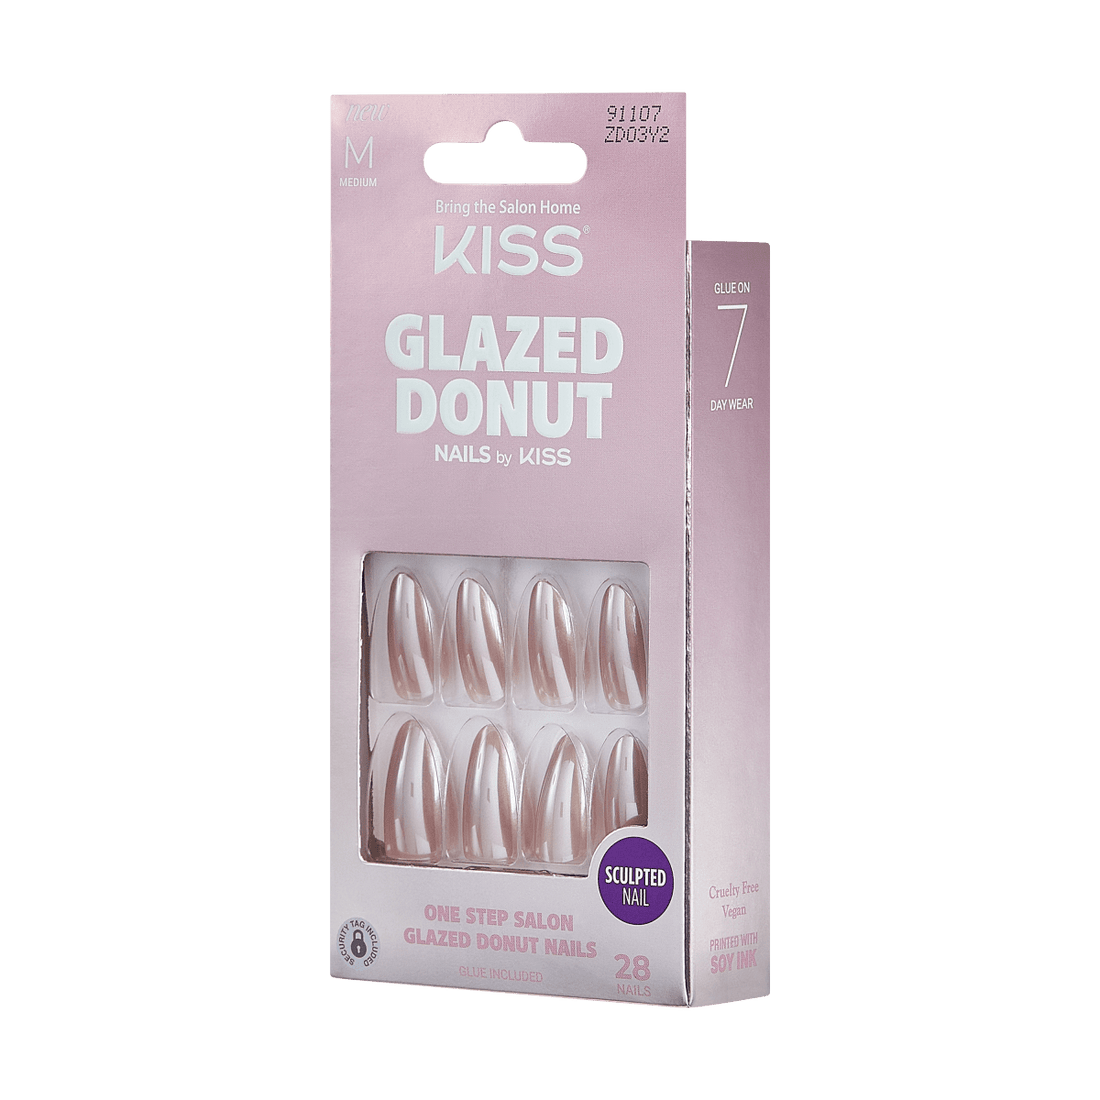 KISS Glazed Donut, Press-On Nails, Holes, Metallic, Med Almond, 28ct